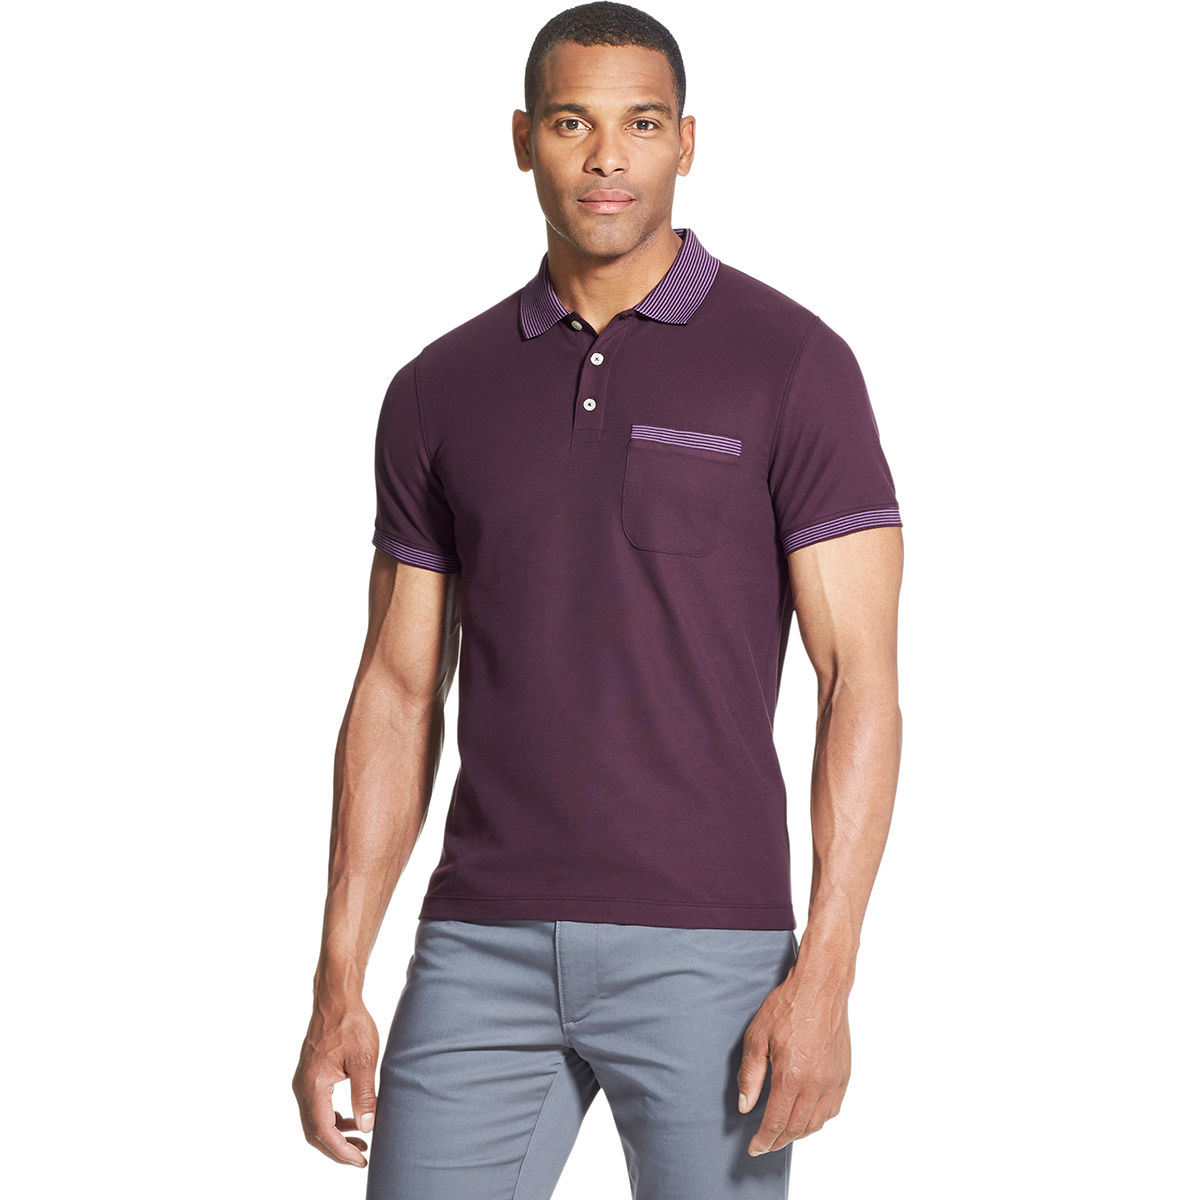 Van Heusen Men's Never Tuck Polo Shirt - Purple, L